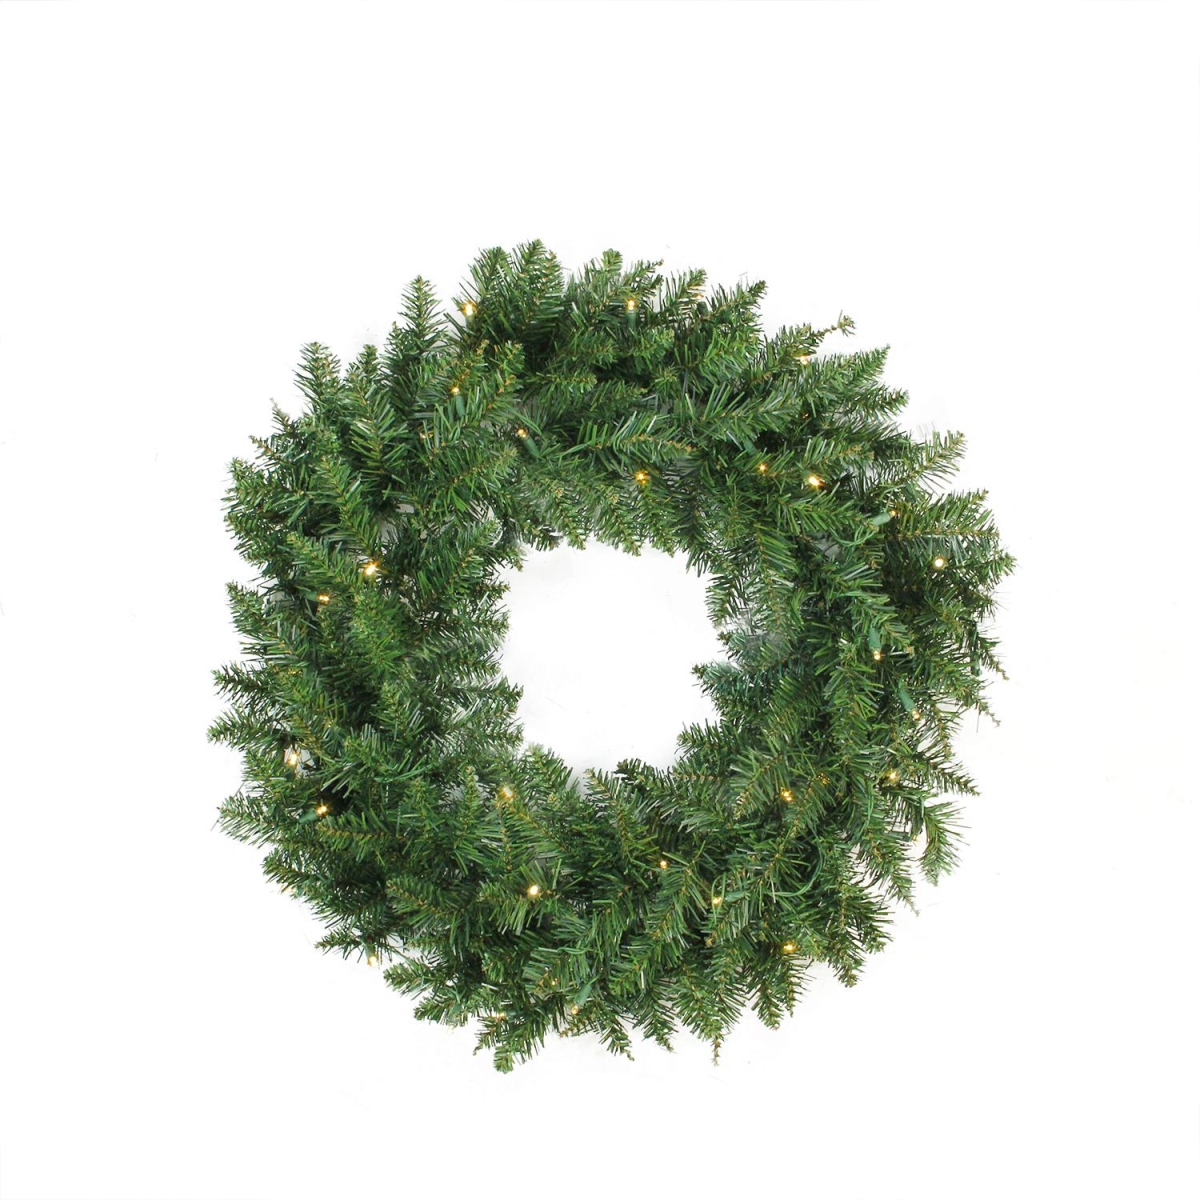 32266437 24 In. Pre-lit Buffalo Fir Artificial Christmas Wreath - Warm White Led Lights